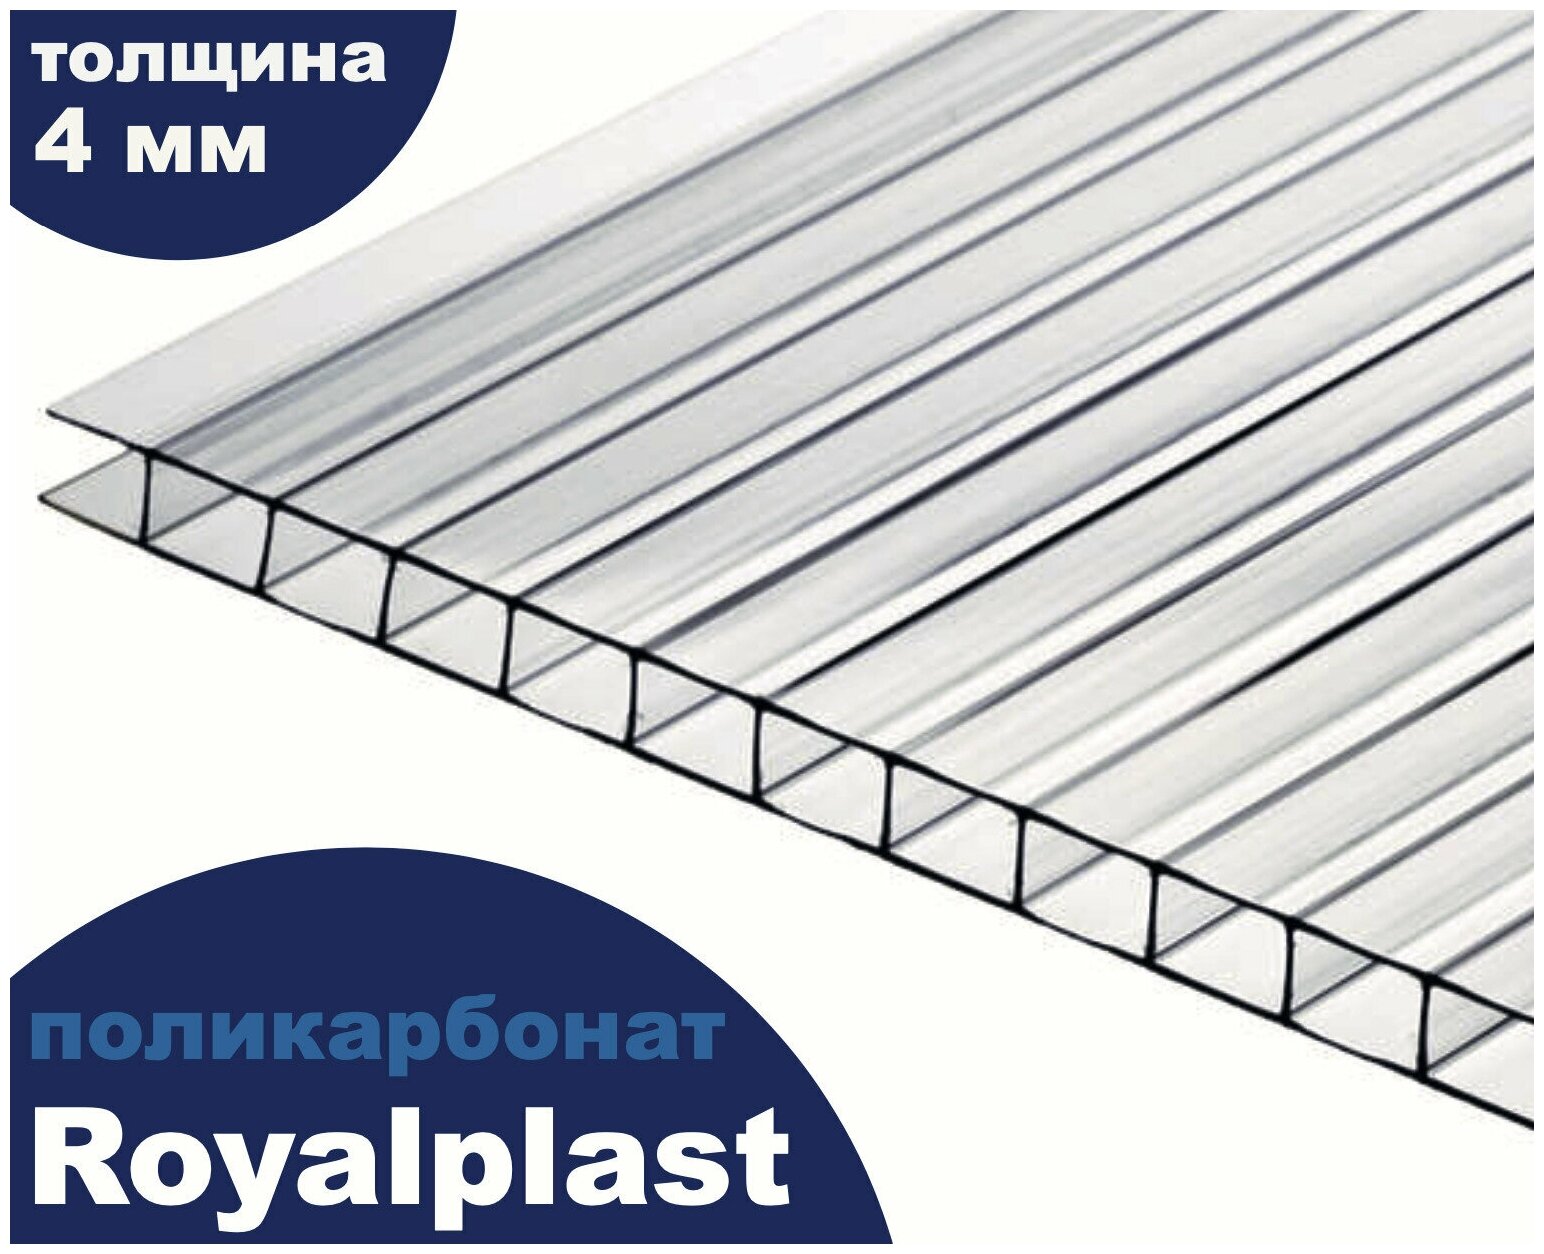 Премиум поликарбонат прозрачный, Royalplast, 4 мм, 6 метров, 3 листа